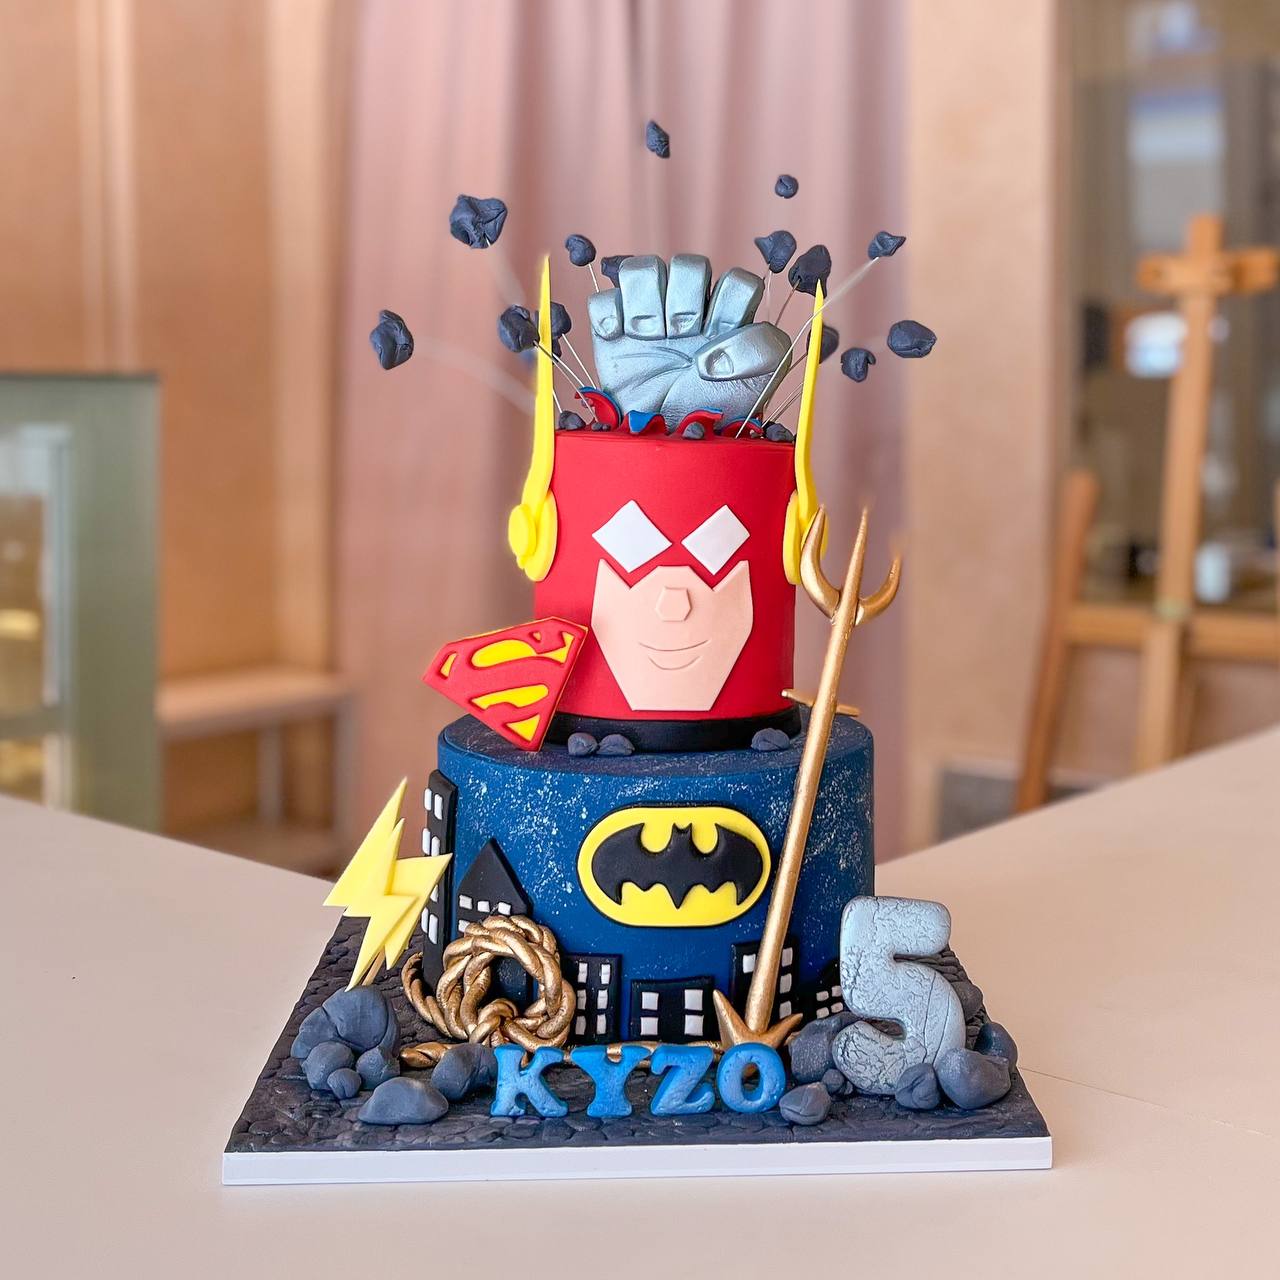 DC superhero birthday cake